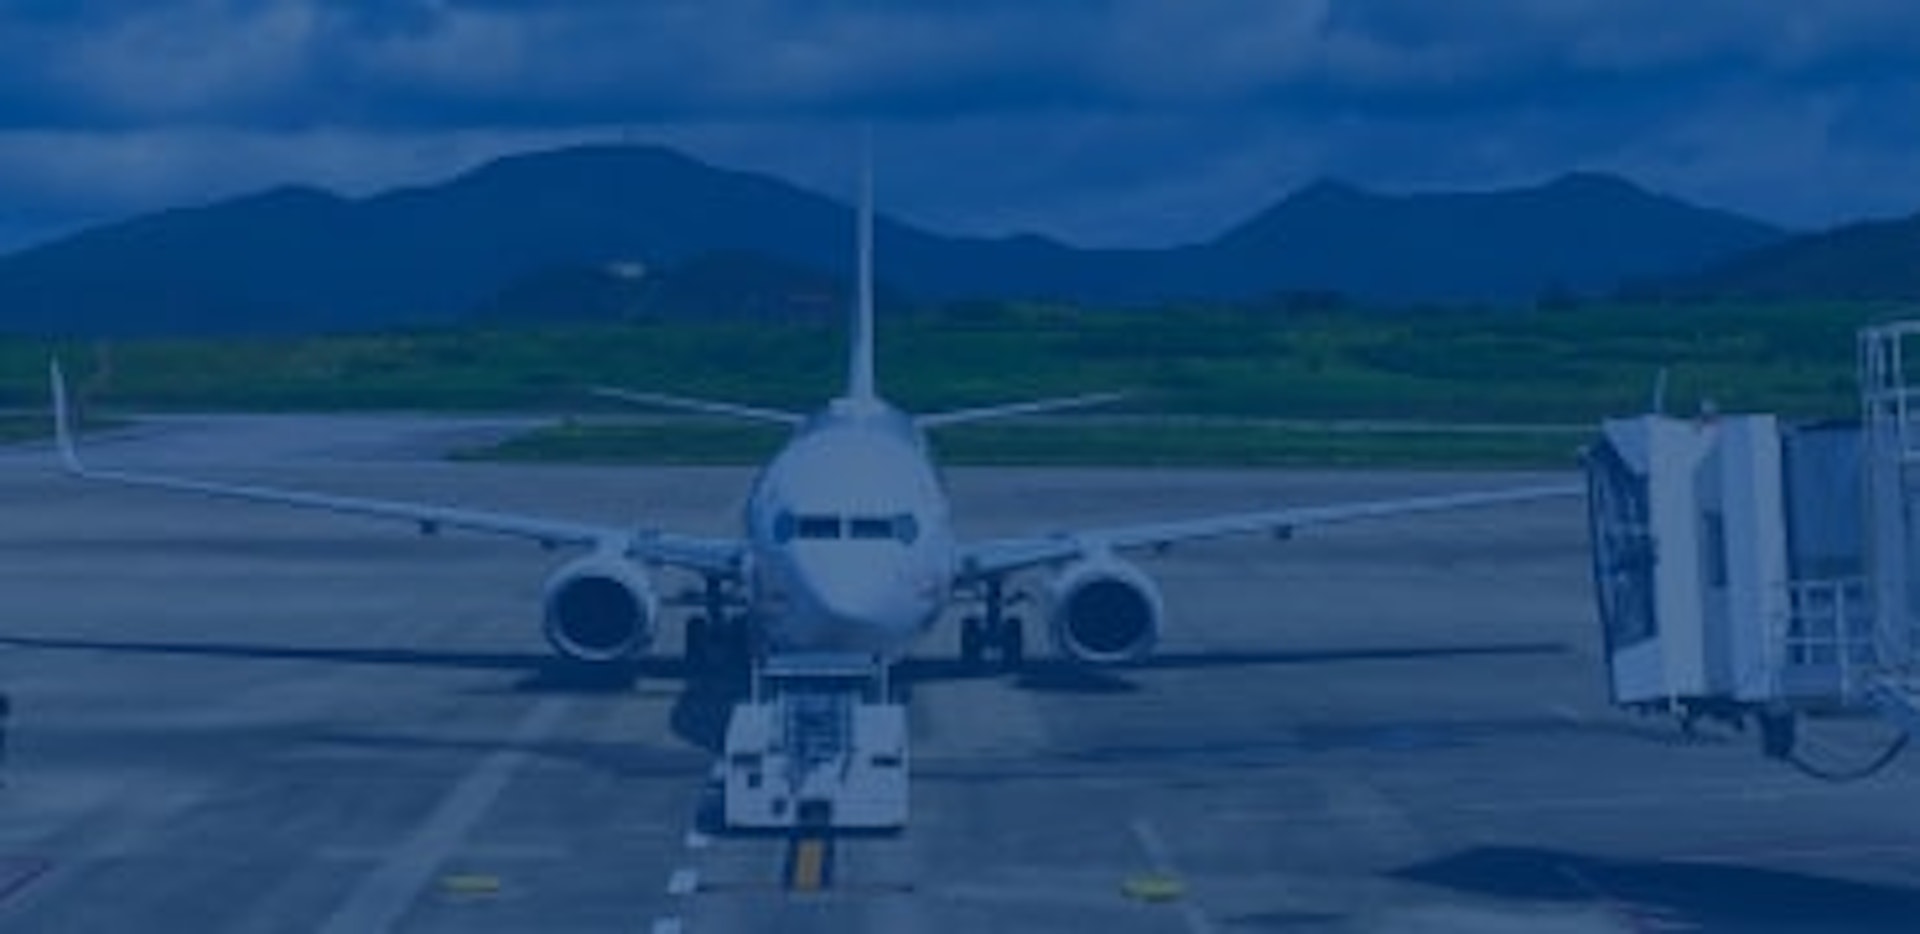 Cebu Pacific Air background image